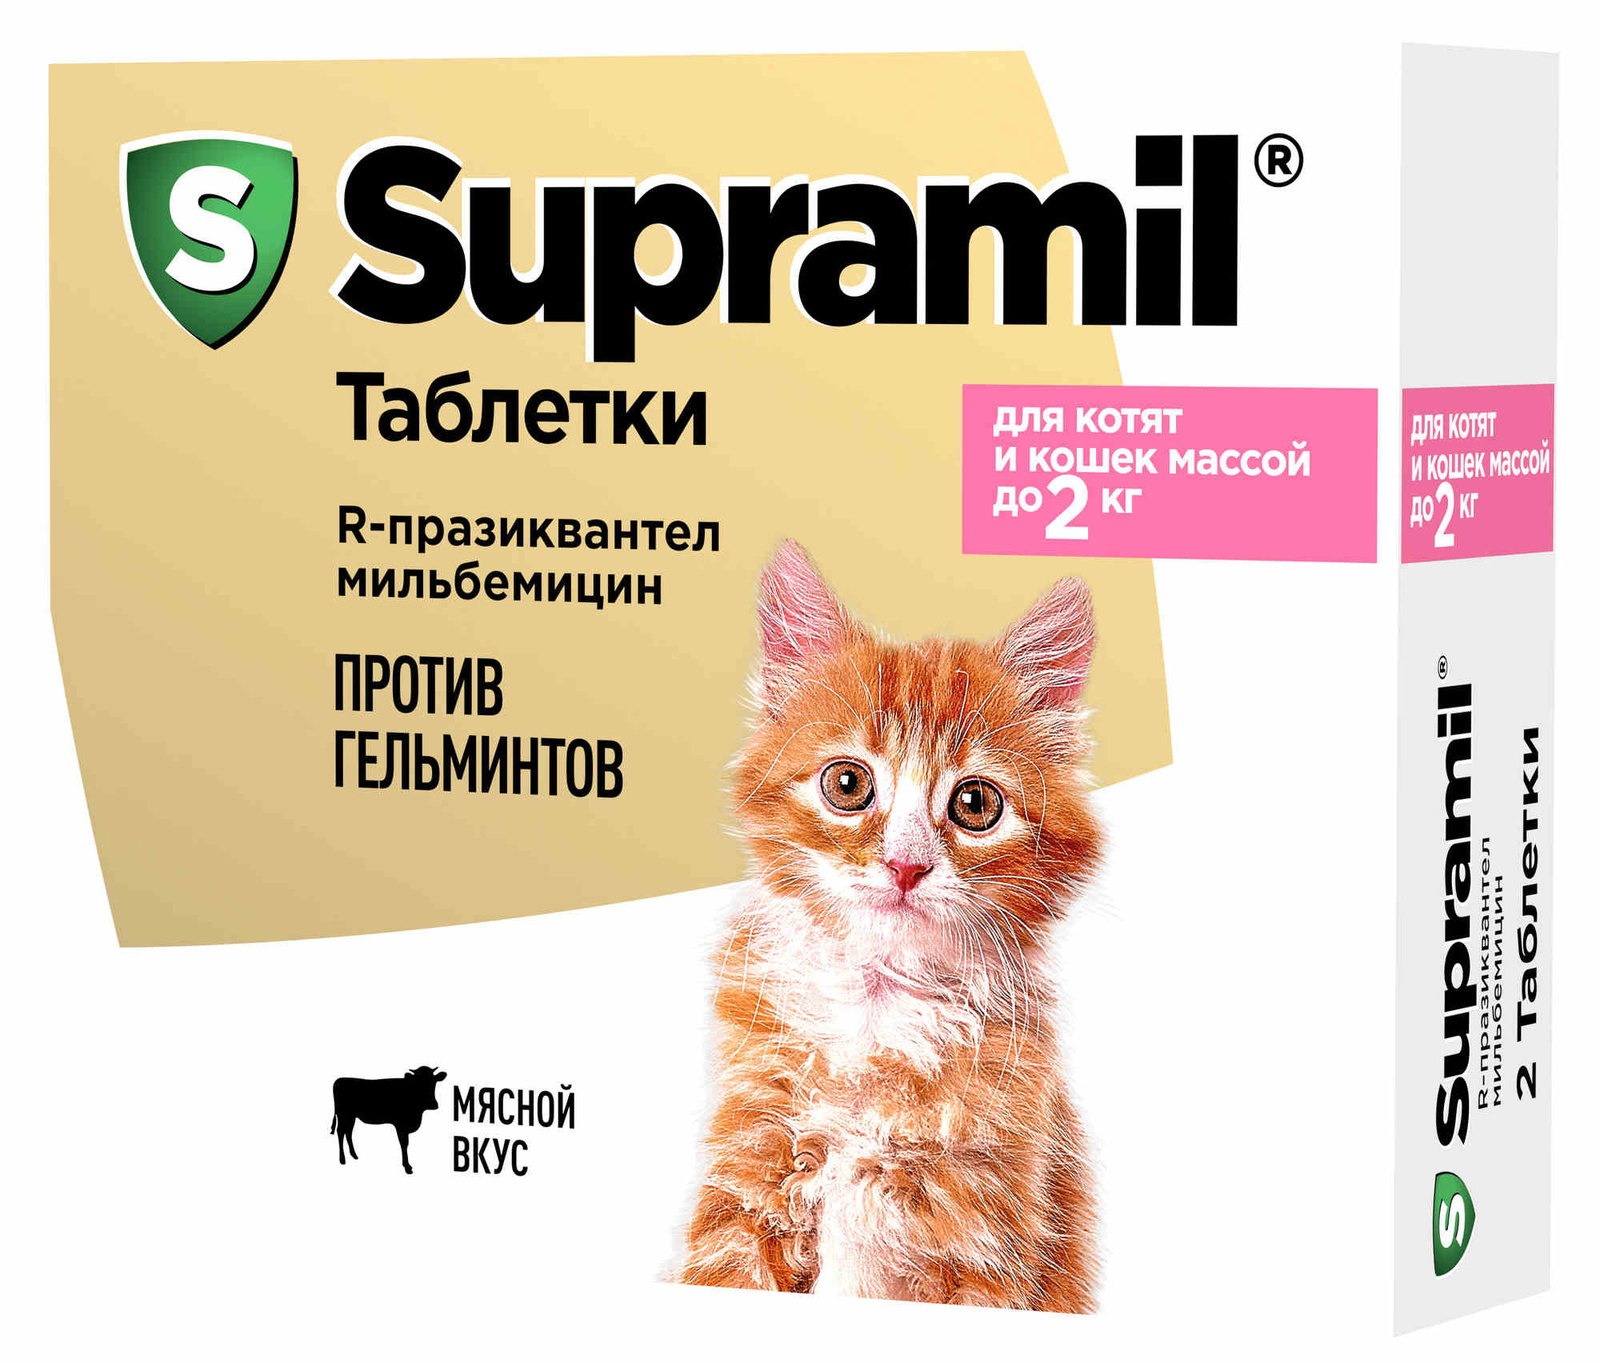 Астрафарм Астрафарм антигельминтный препарат Supramil для котят и кошек массой до 2 кг (таблетки) (20 г) астрафарм supramil таблетки для щенков и собак массой до 20 кг 2 таб